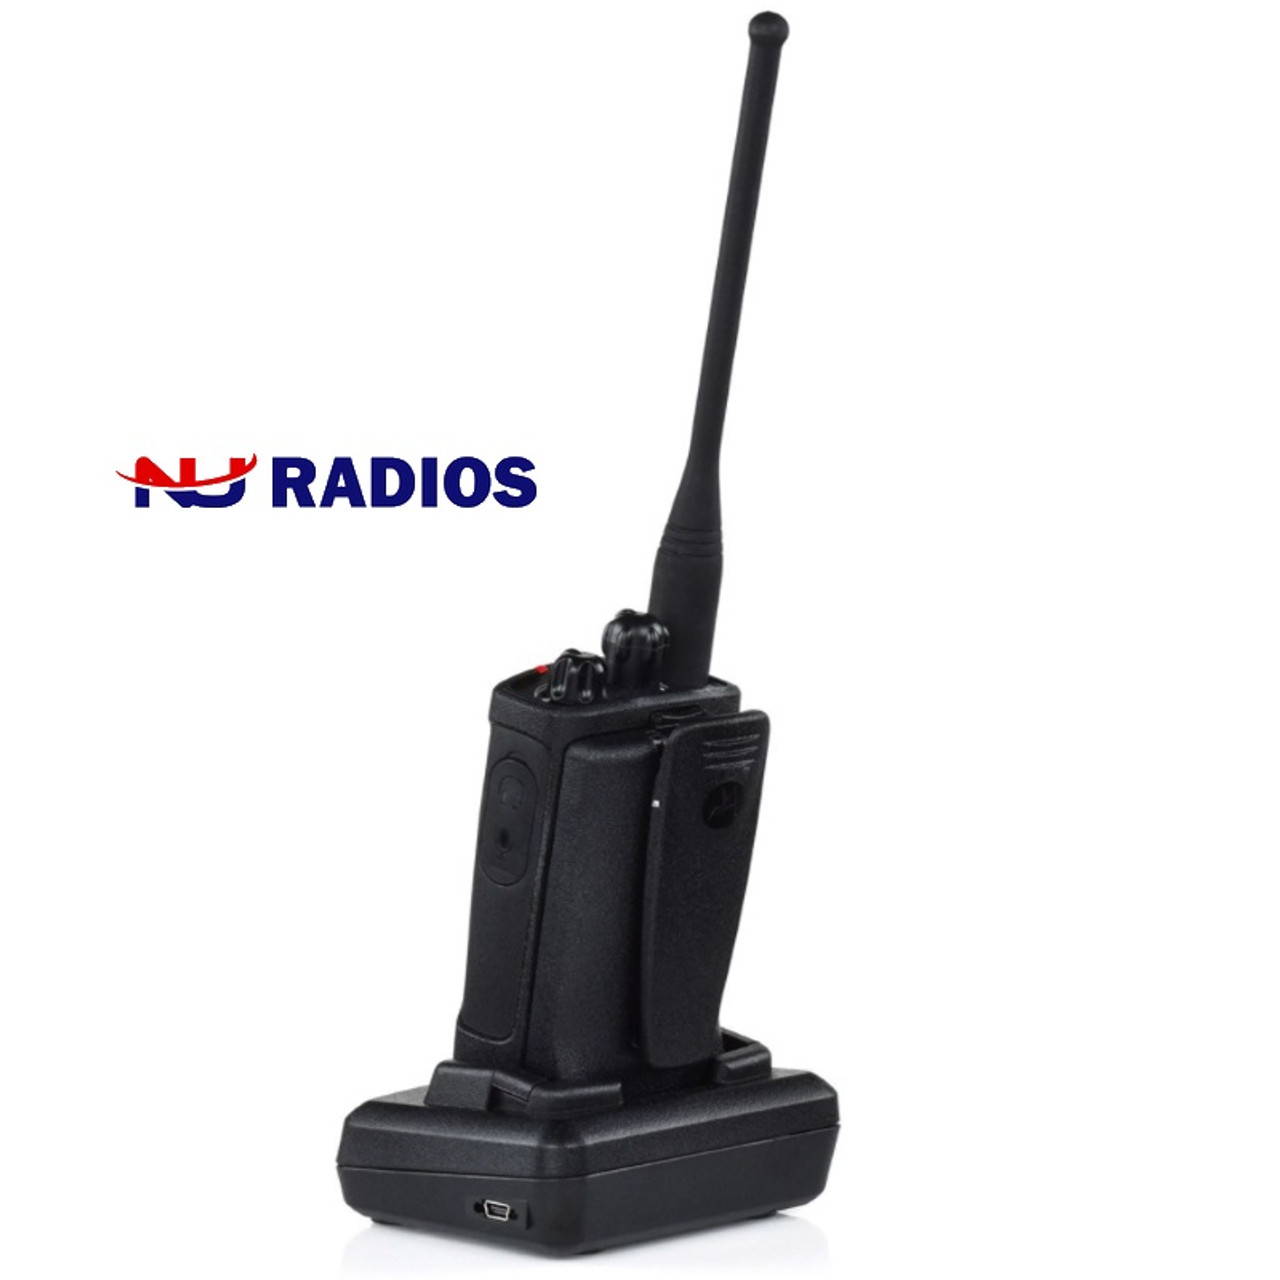 x Motorola RDU4100 RDX Business Series Two-Way UHF Radio (Black) (RDU4100)   x Motorola HKLN4604 PTT Earpiece Pack with Mic Bundle - 1